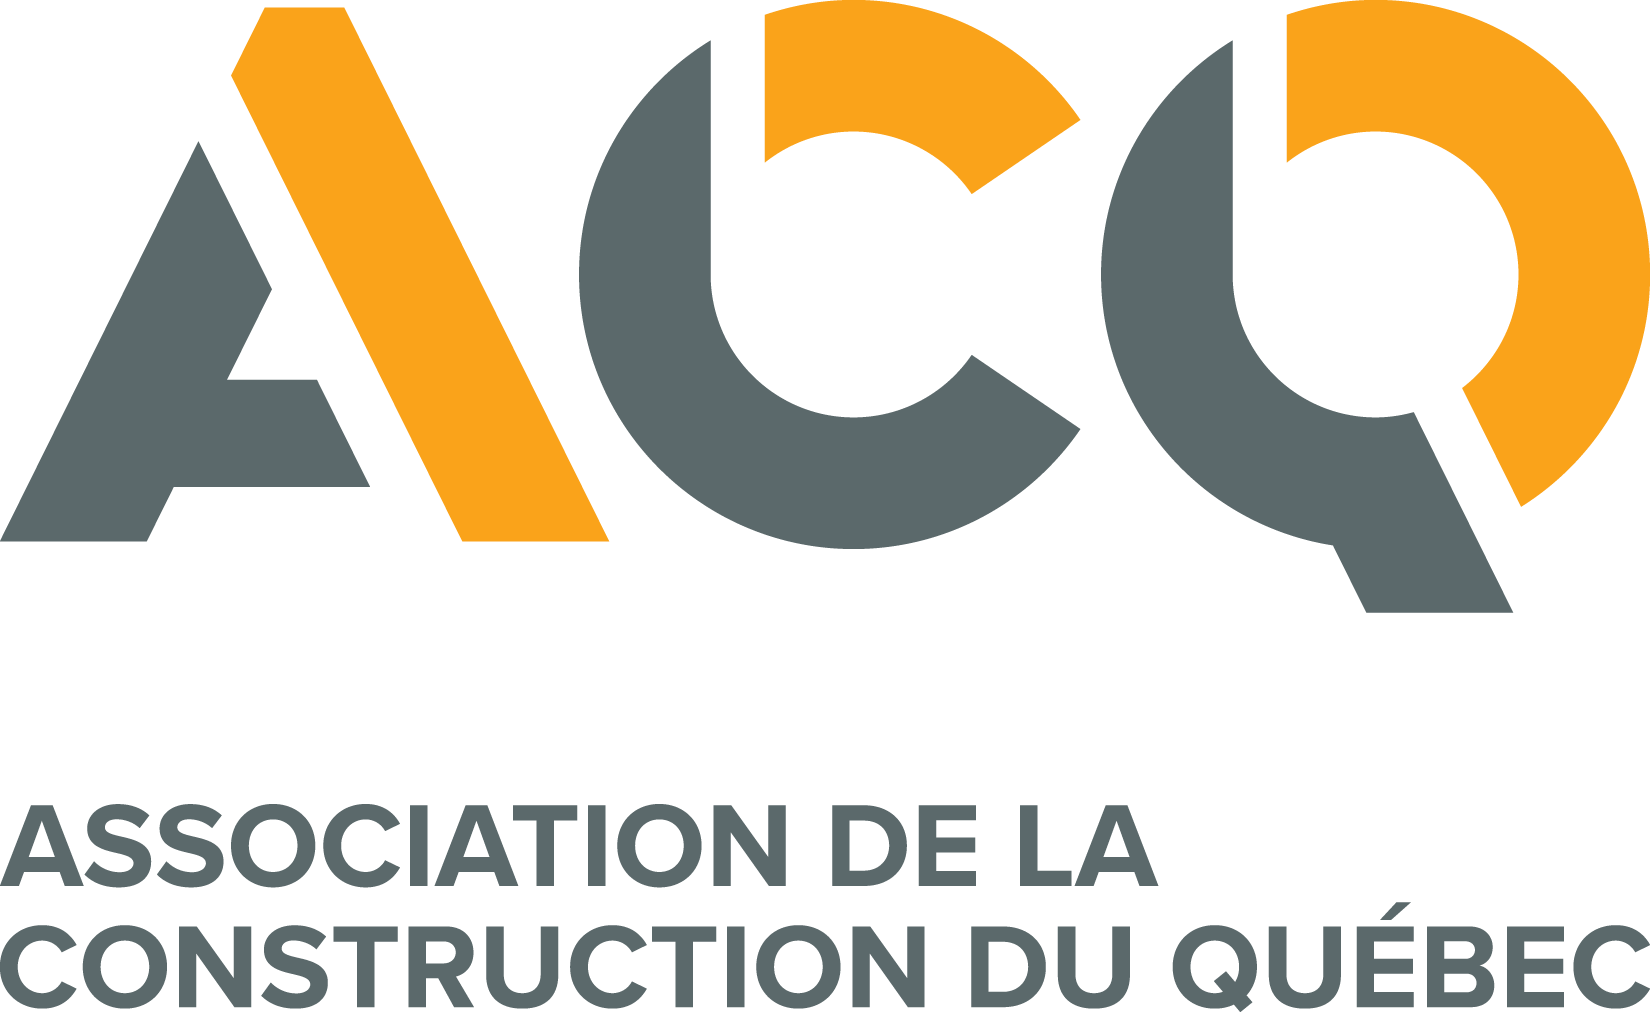 Le logo de l'association de la construction du québec